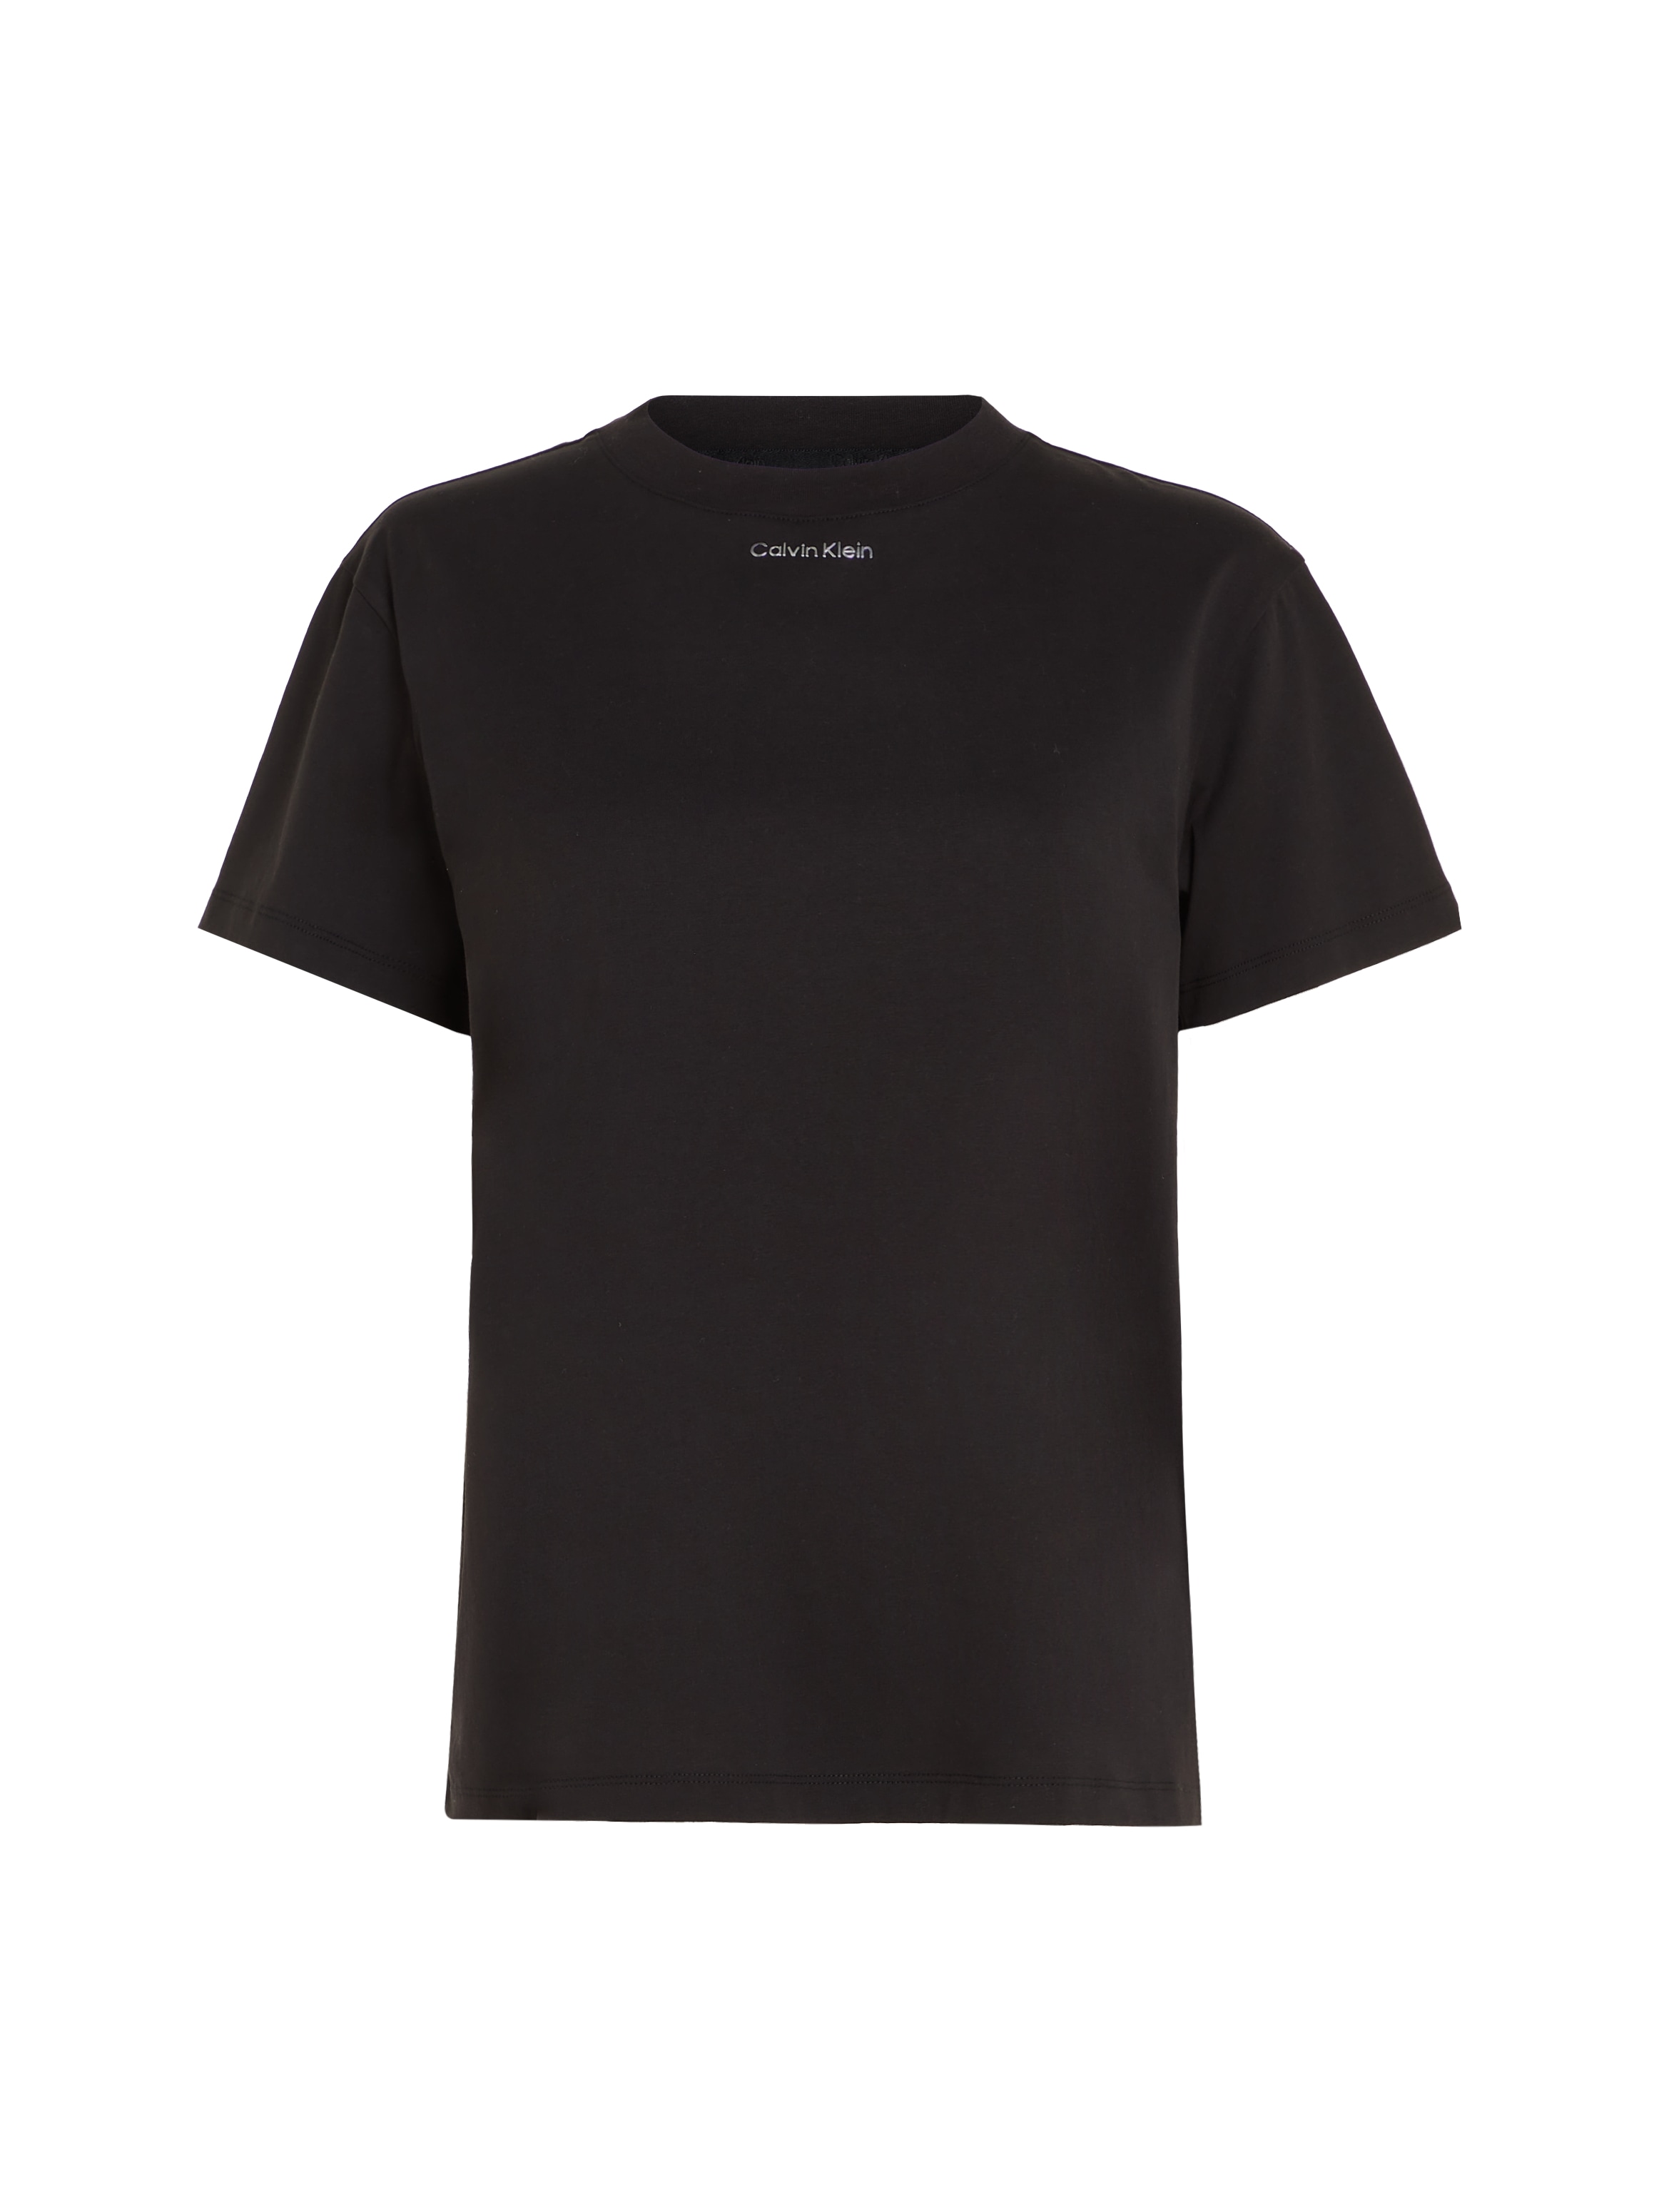 OTTO MICRO Klein Calvin T bei SHIRT« »METALLIC LOGO T-Shirt kaufen